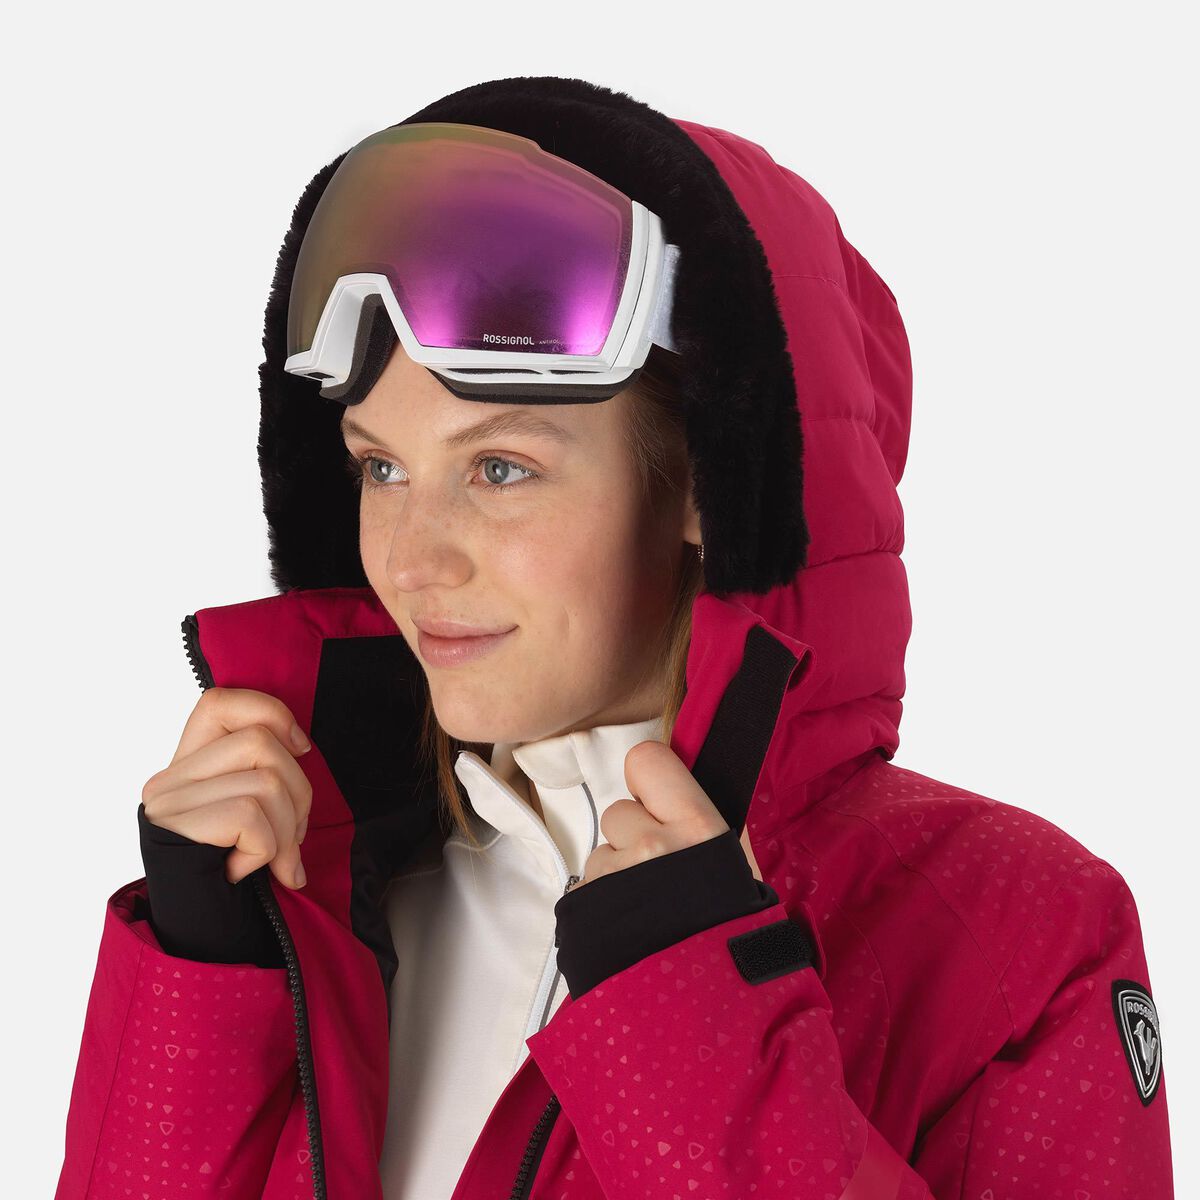 Rossignol Women's Controle Ski Jacket | Jackets Women | Rossignol